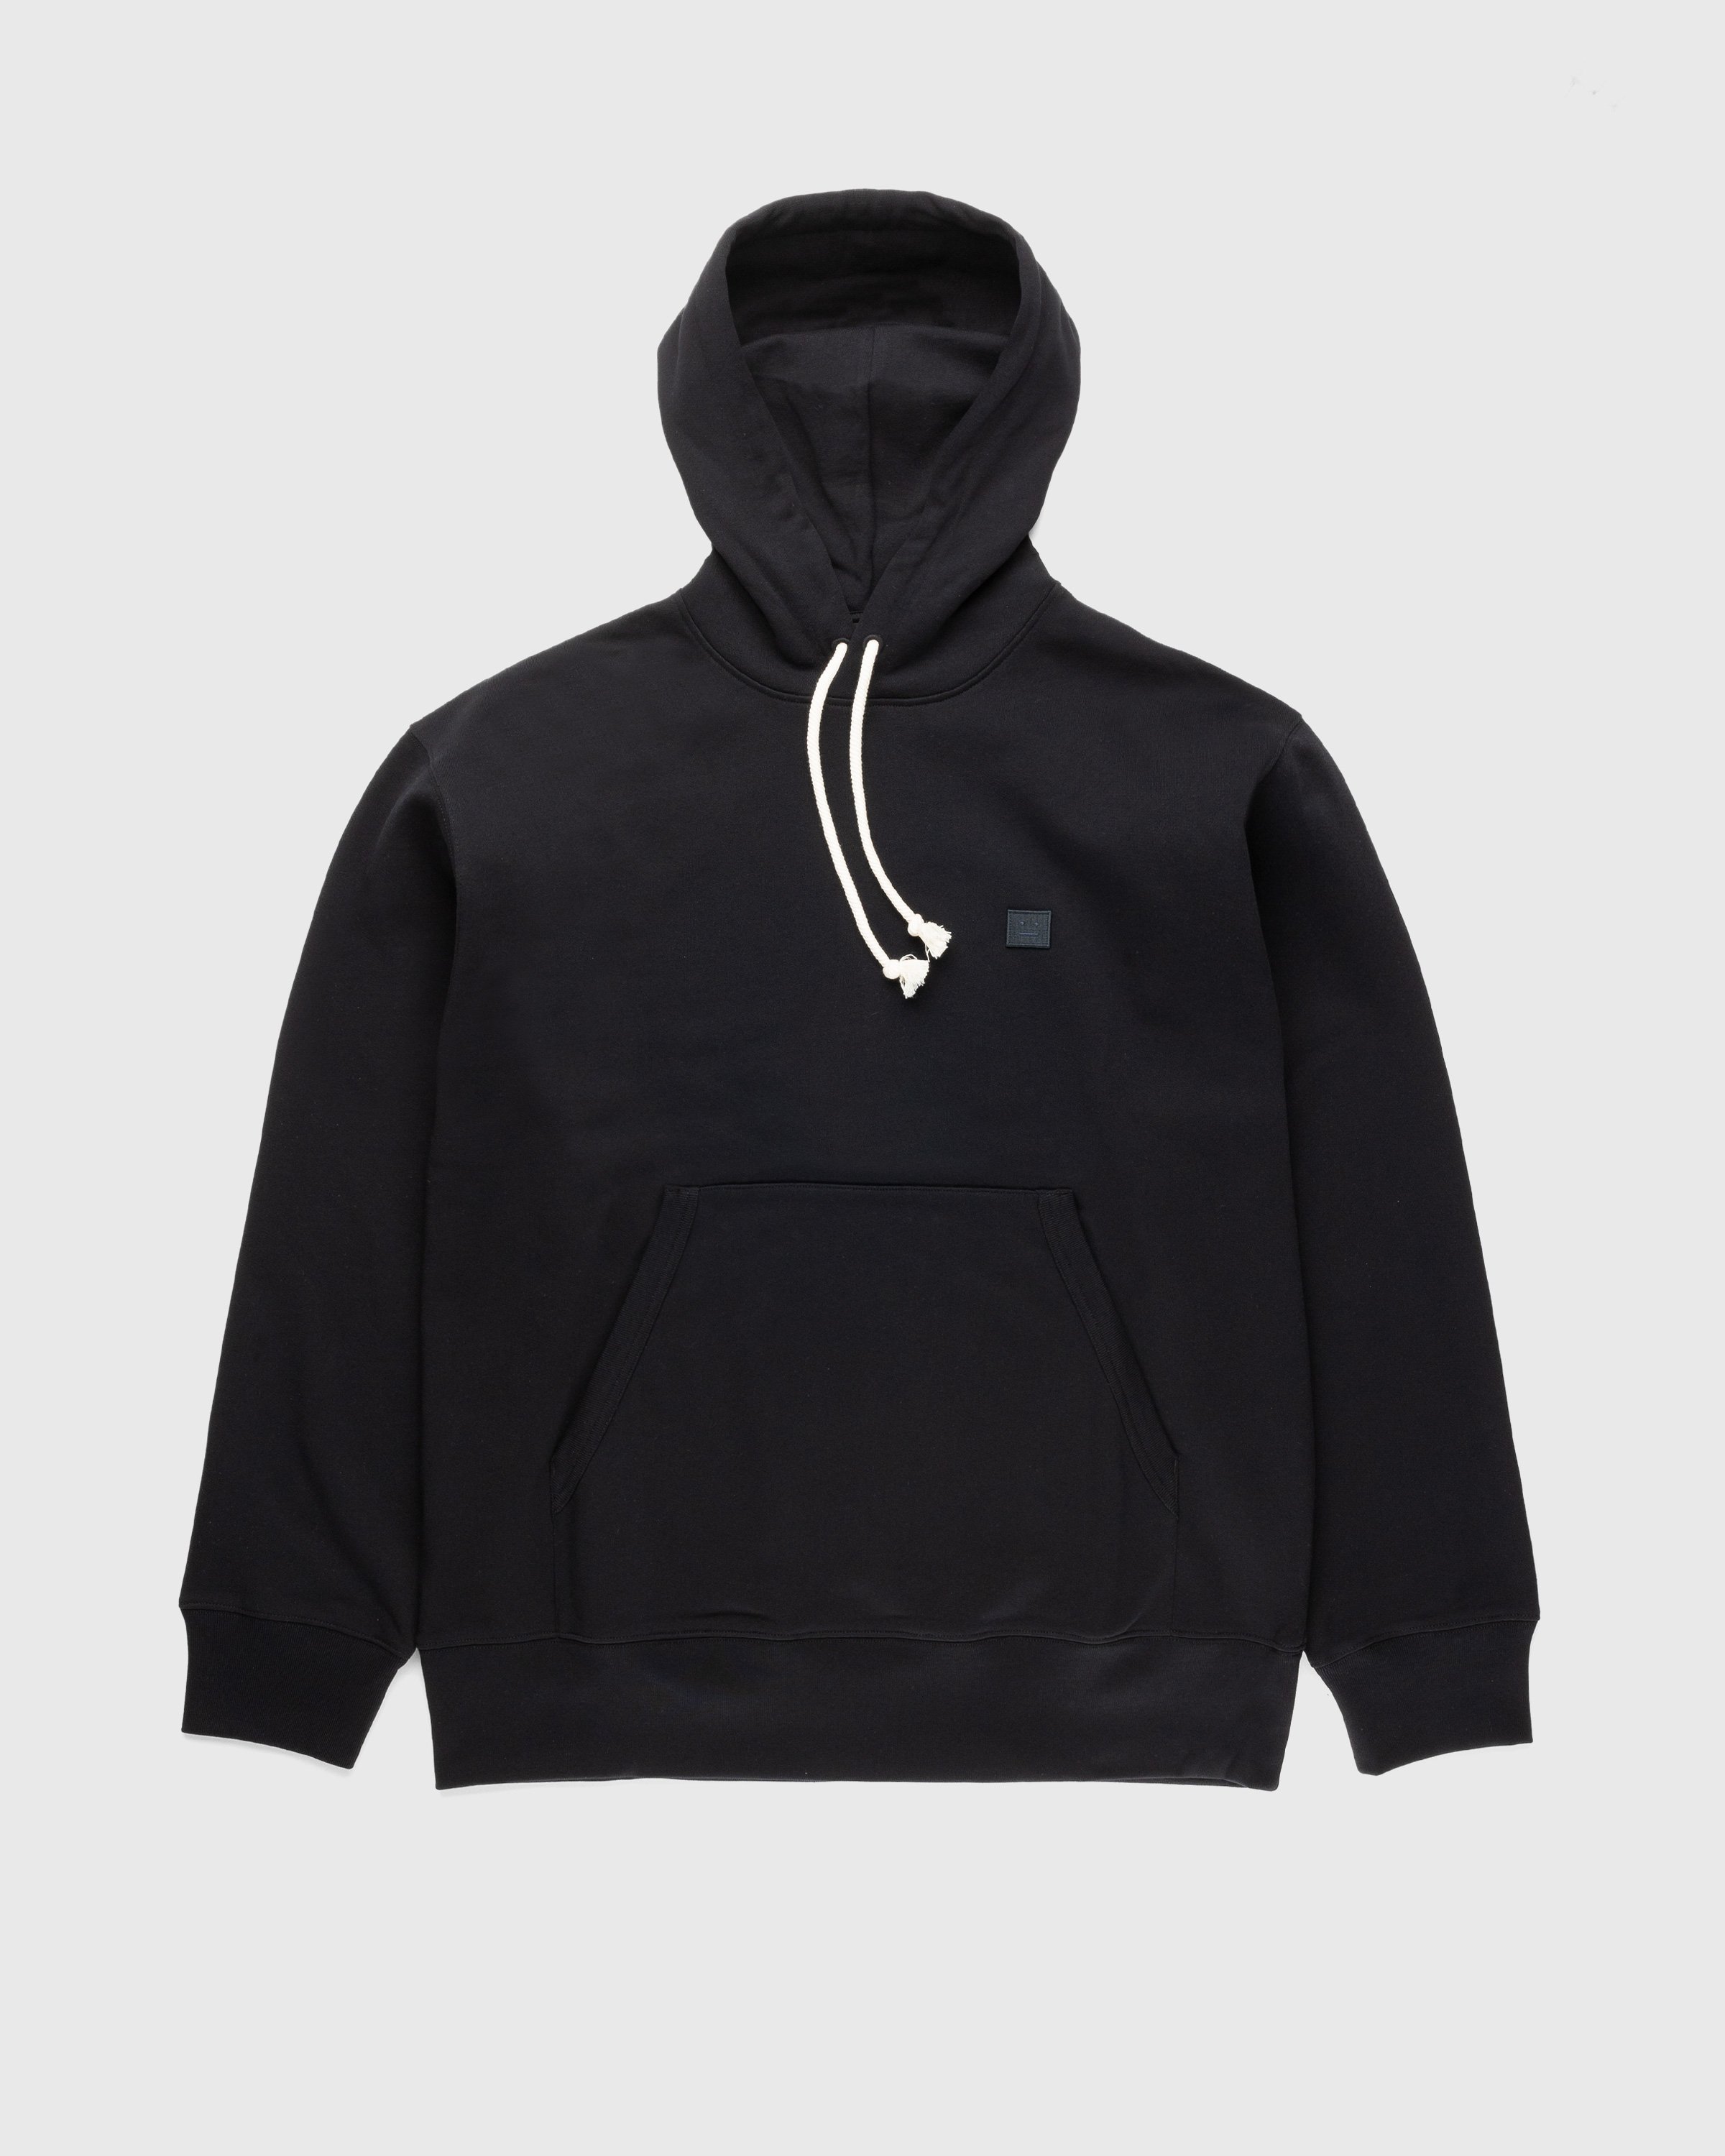 Acne Studios - Organic Cotton Hooded Sweatshirt Black - Clothing - Black - Image 1